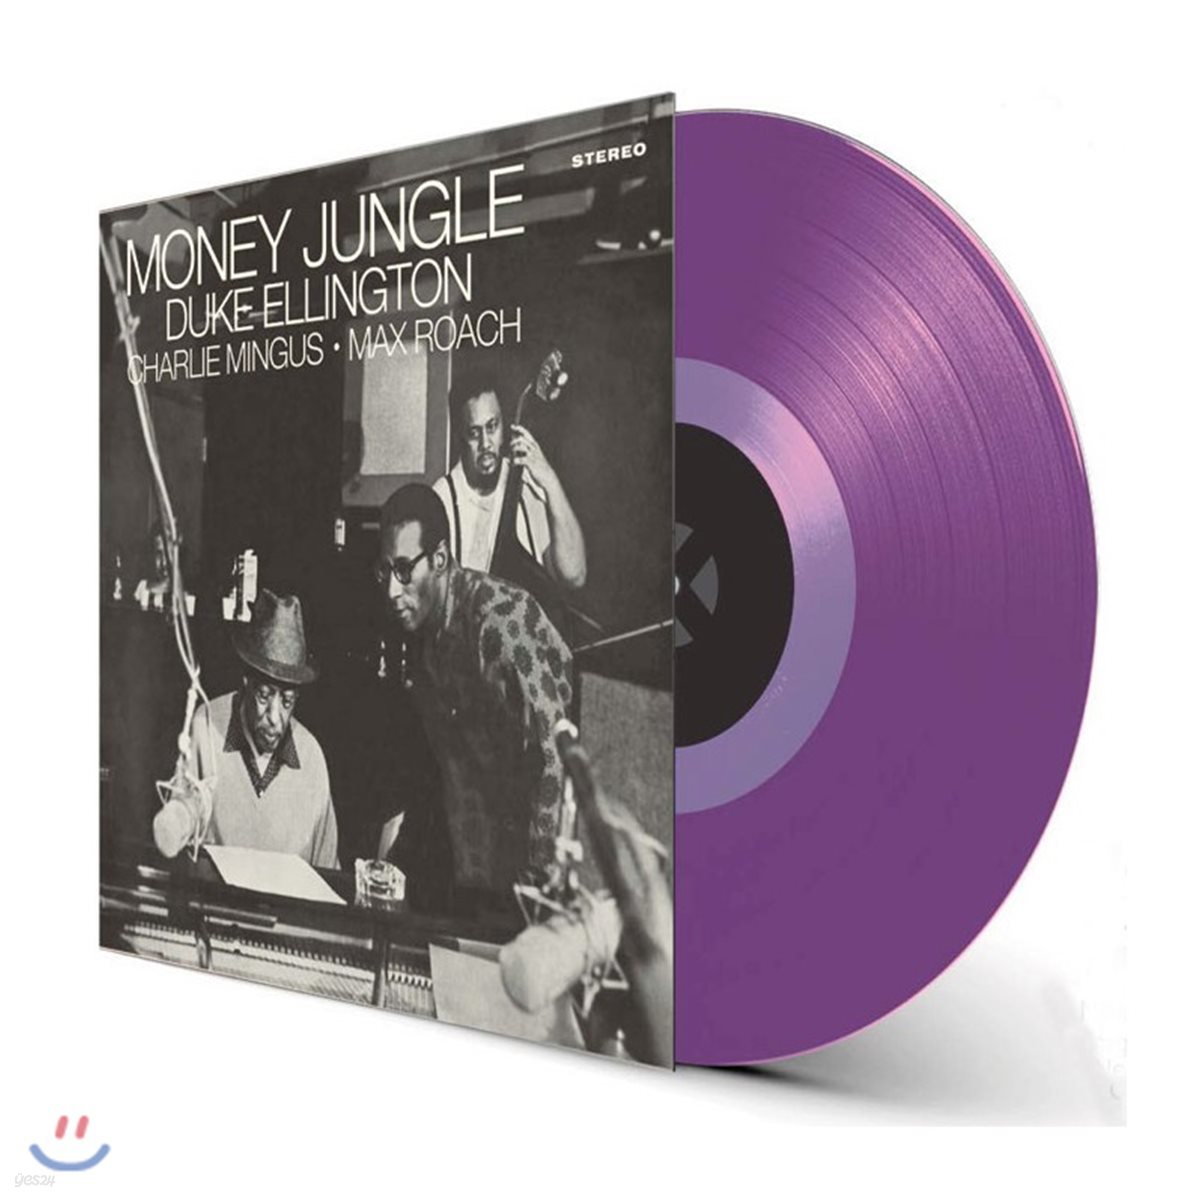 Duke Ellington / Charles Mingus / Max Roach (듀크 엘링턴, 찰스 밍거스, 맥스 로치) - Money Jungle [투명 퍼플 컬러 LP]